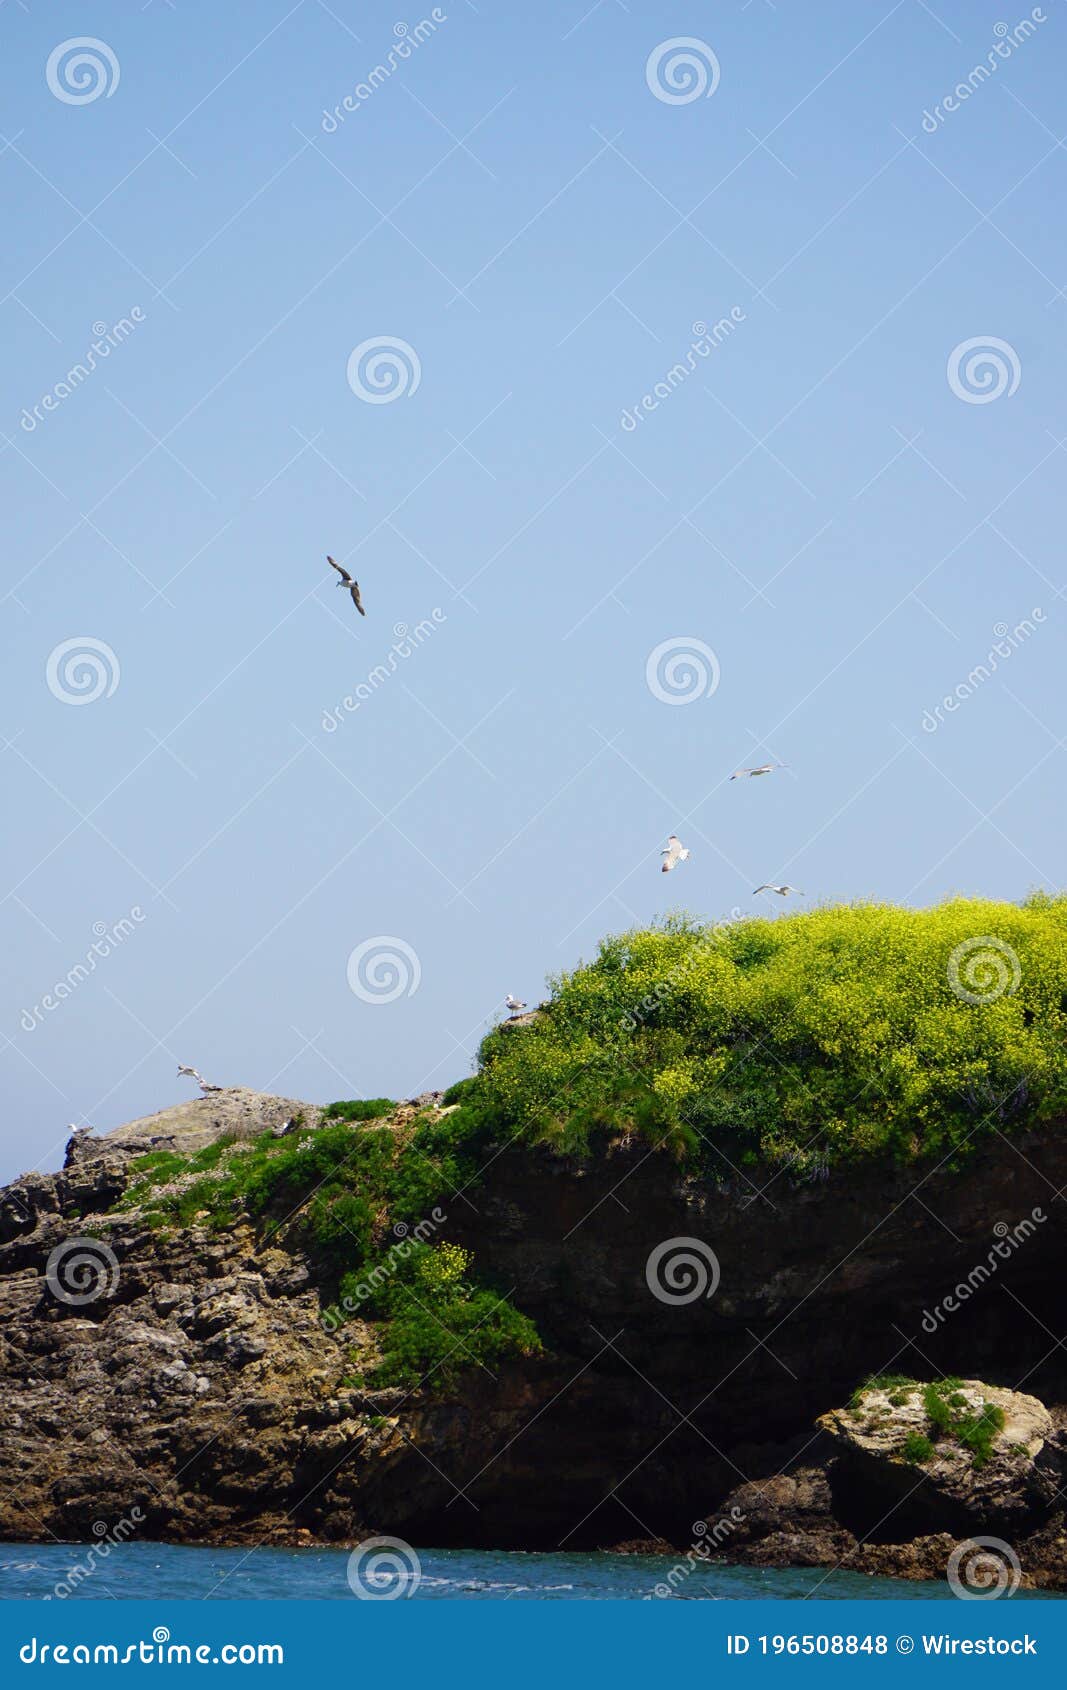 gulls nesting rock near a beach in spain